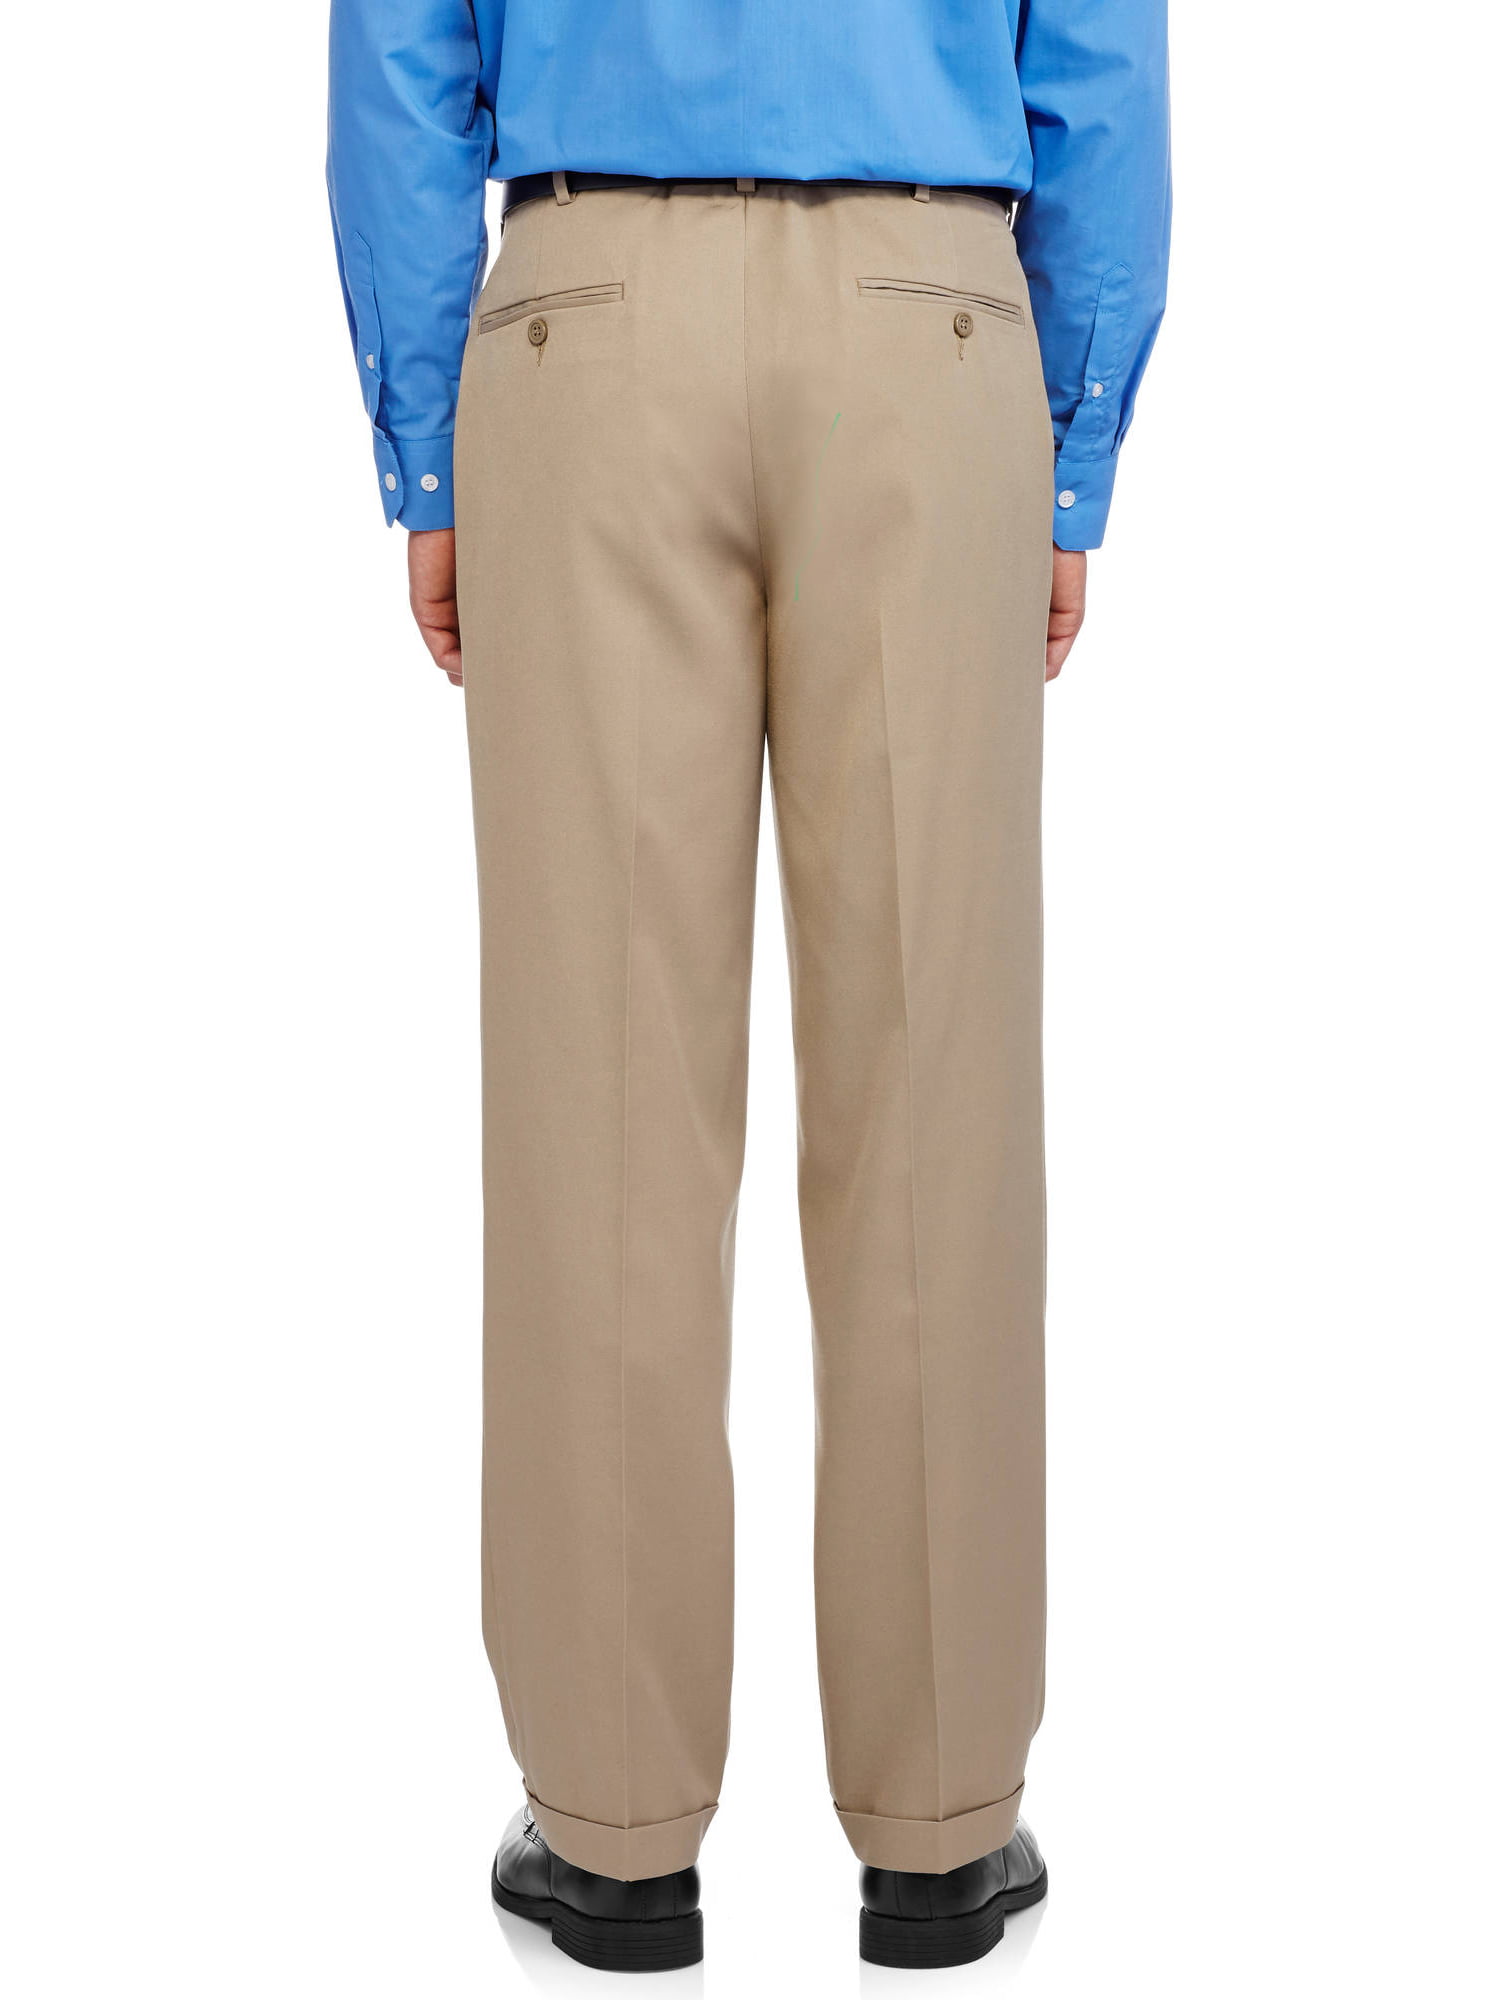 Buy Dakomoda Toddler Boys Cotton Pants Gray FivePocket Stretch Jeans Adjustable  Waist 2T at Amazonin